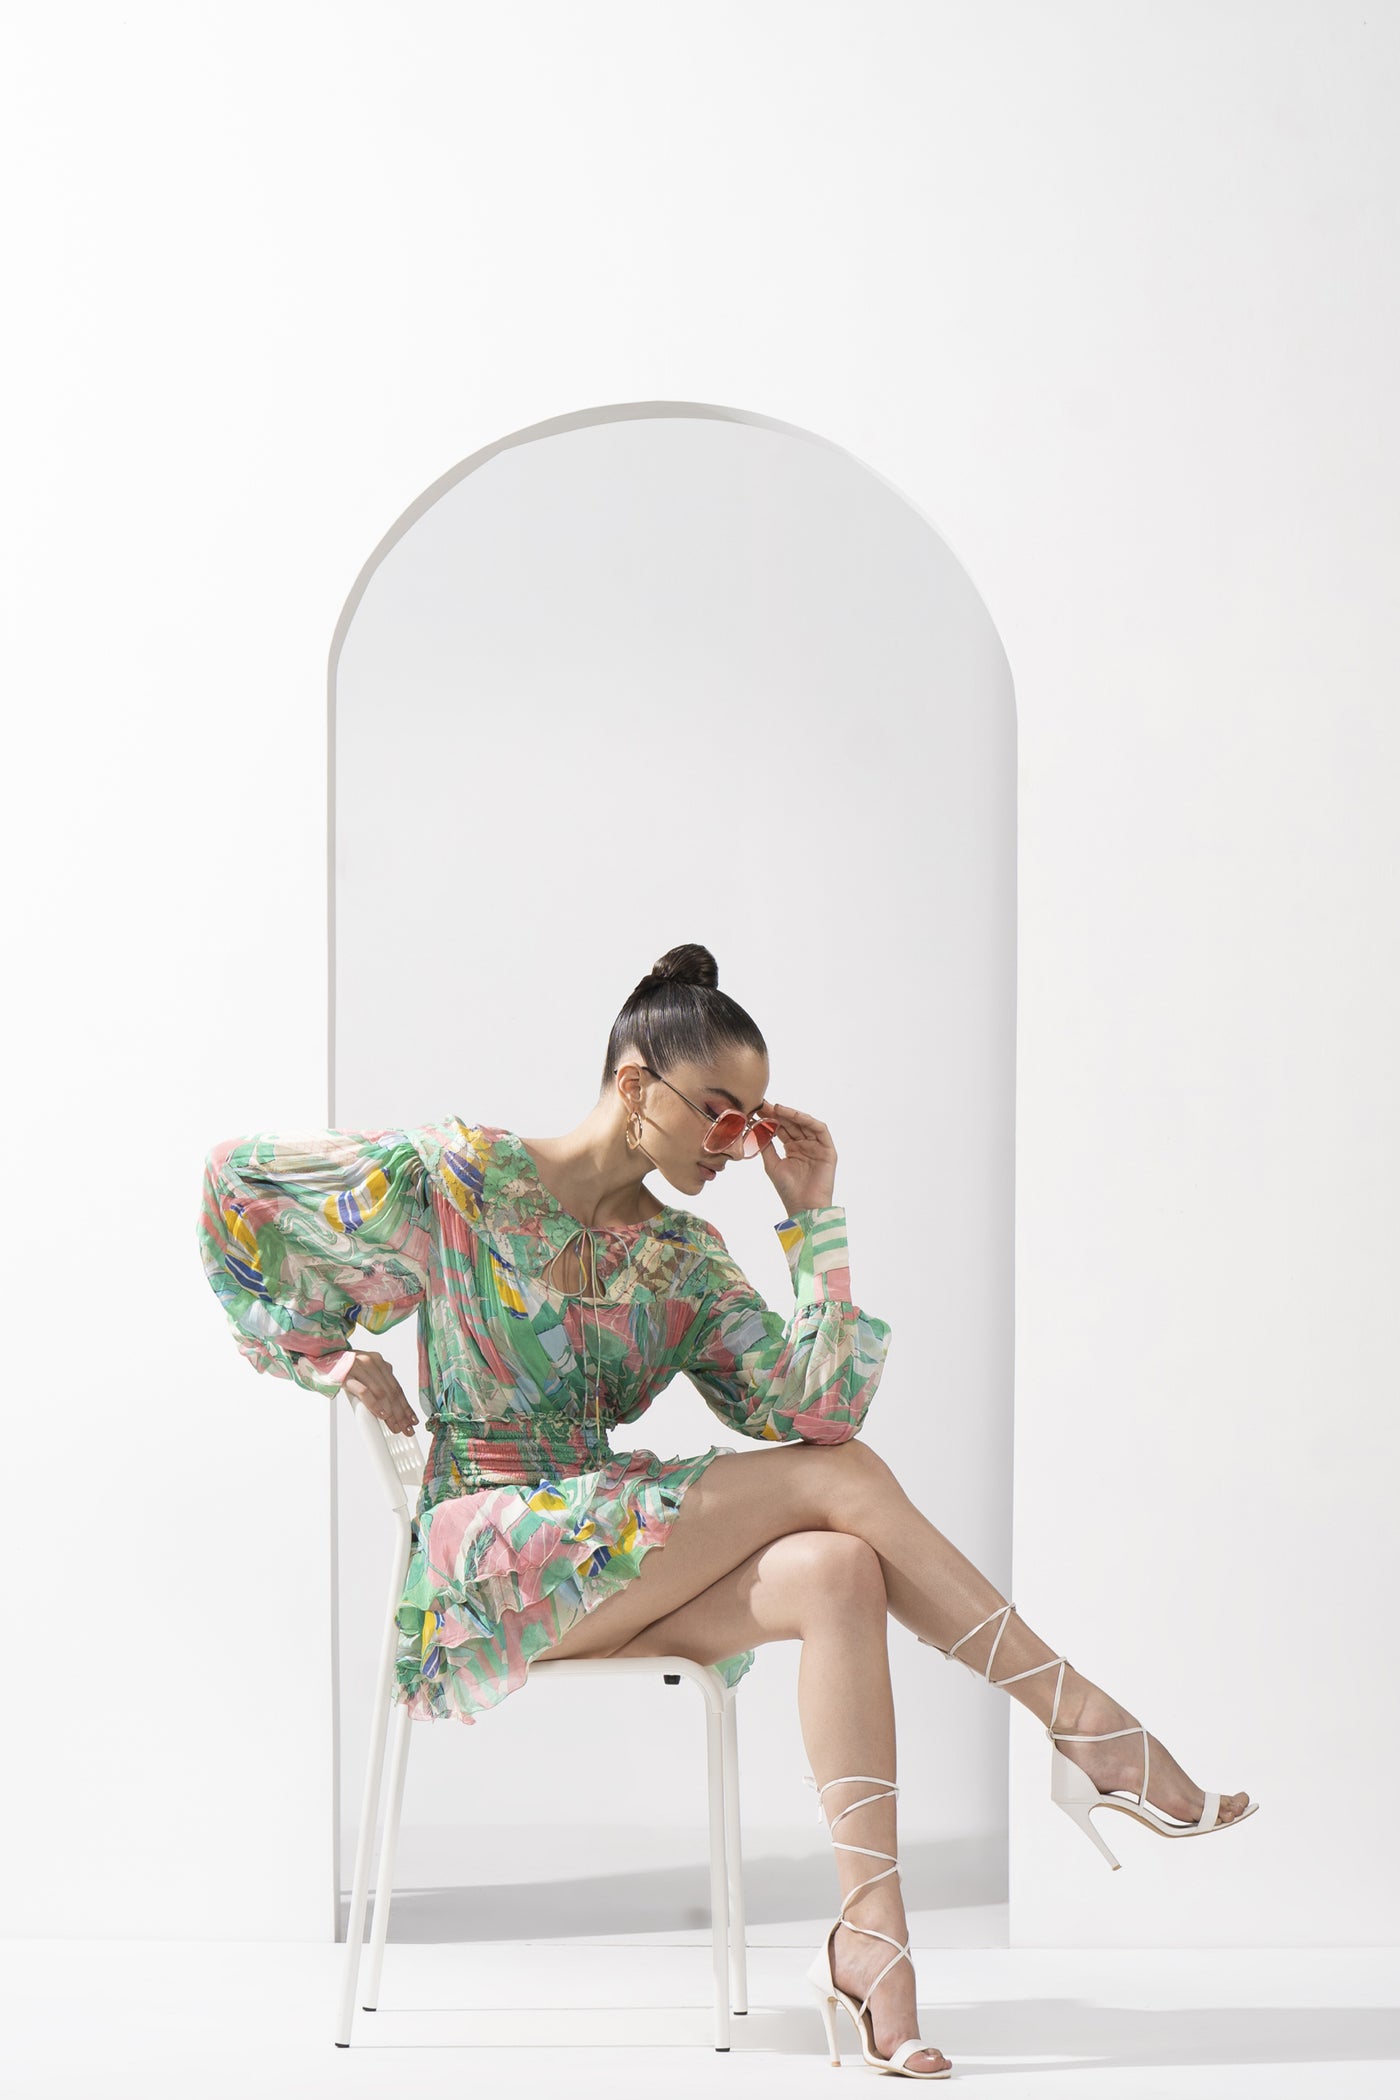 Mandira Wirk Abstract Printed Top And Skirt indian designer wear online shopping melange singapore